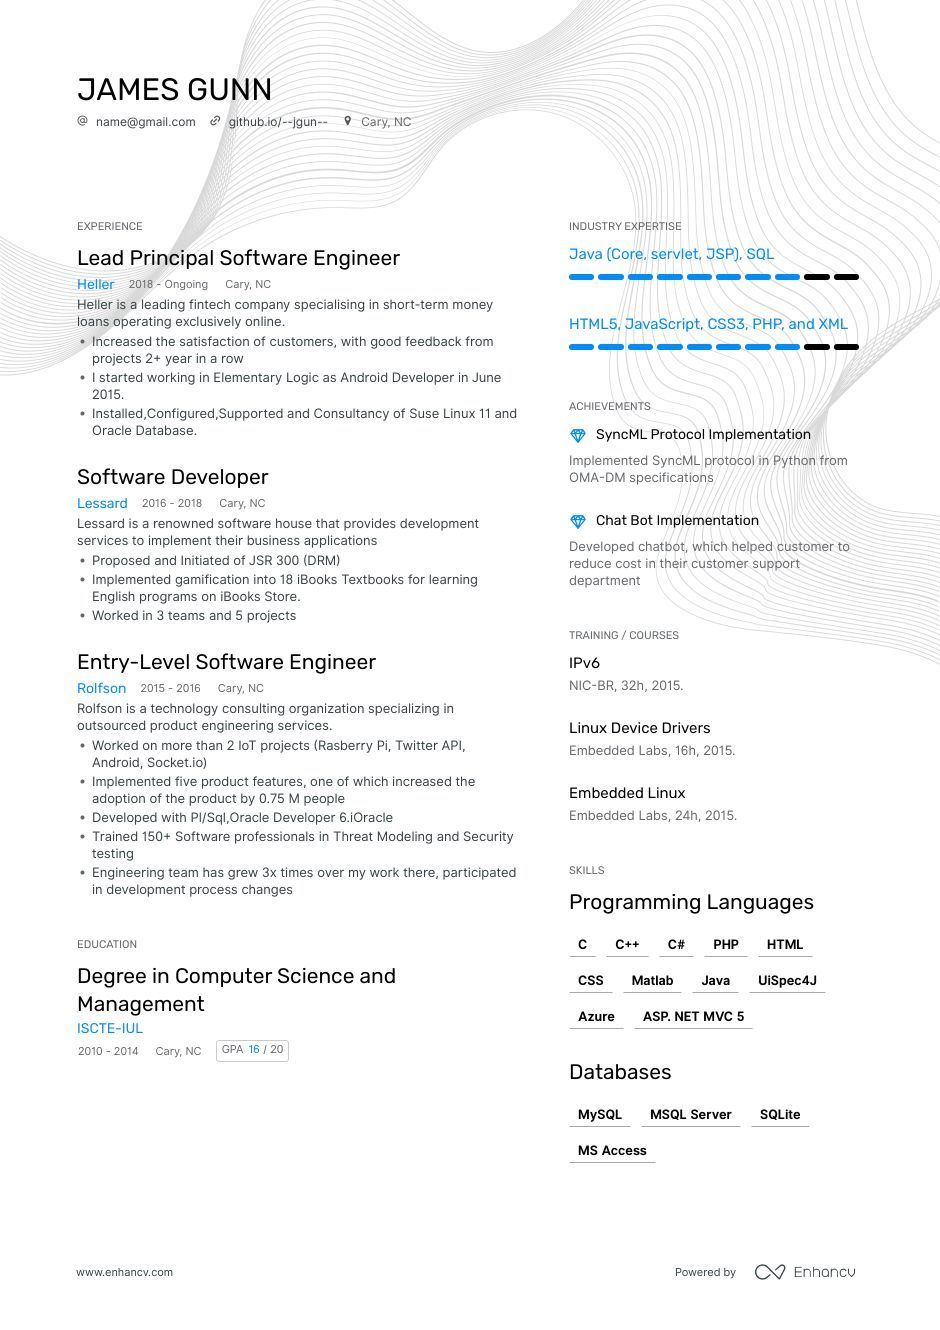 software-engineer_mid-level-software-engineer.jpg